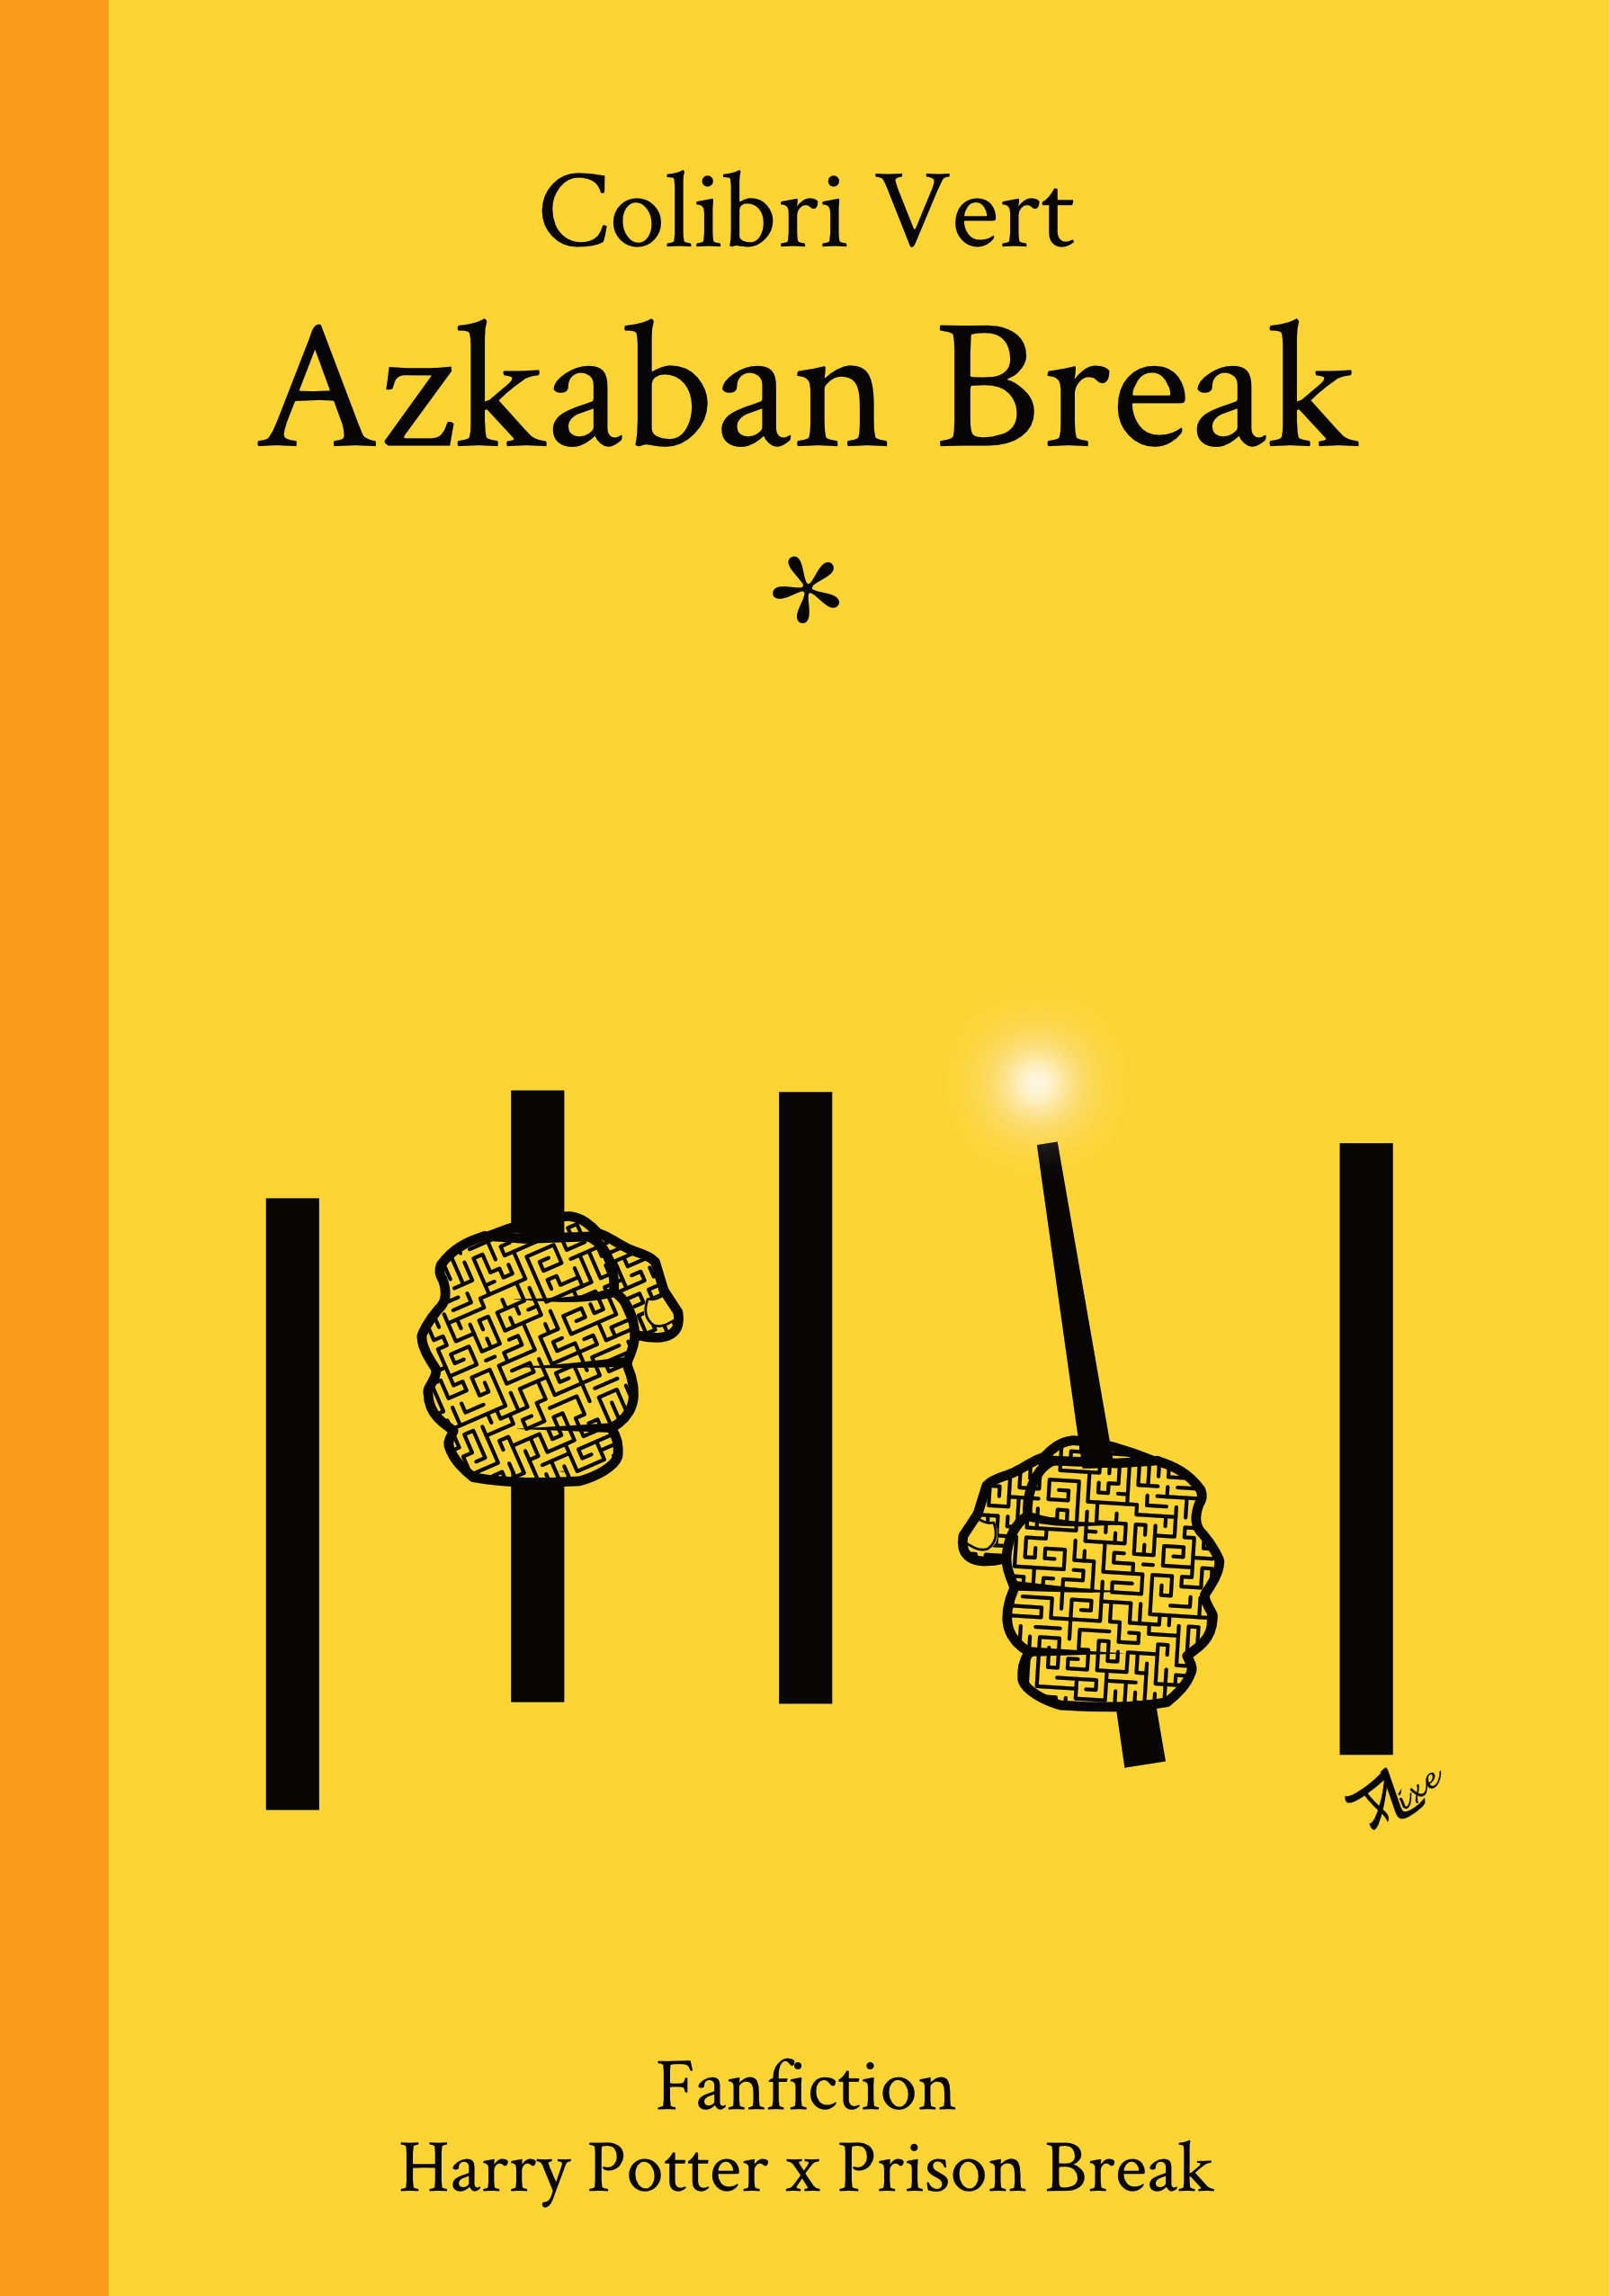 Vignette_COLIBRI VERT_Azkaban Break